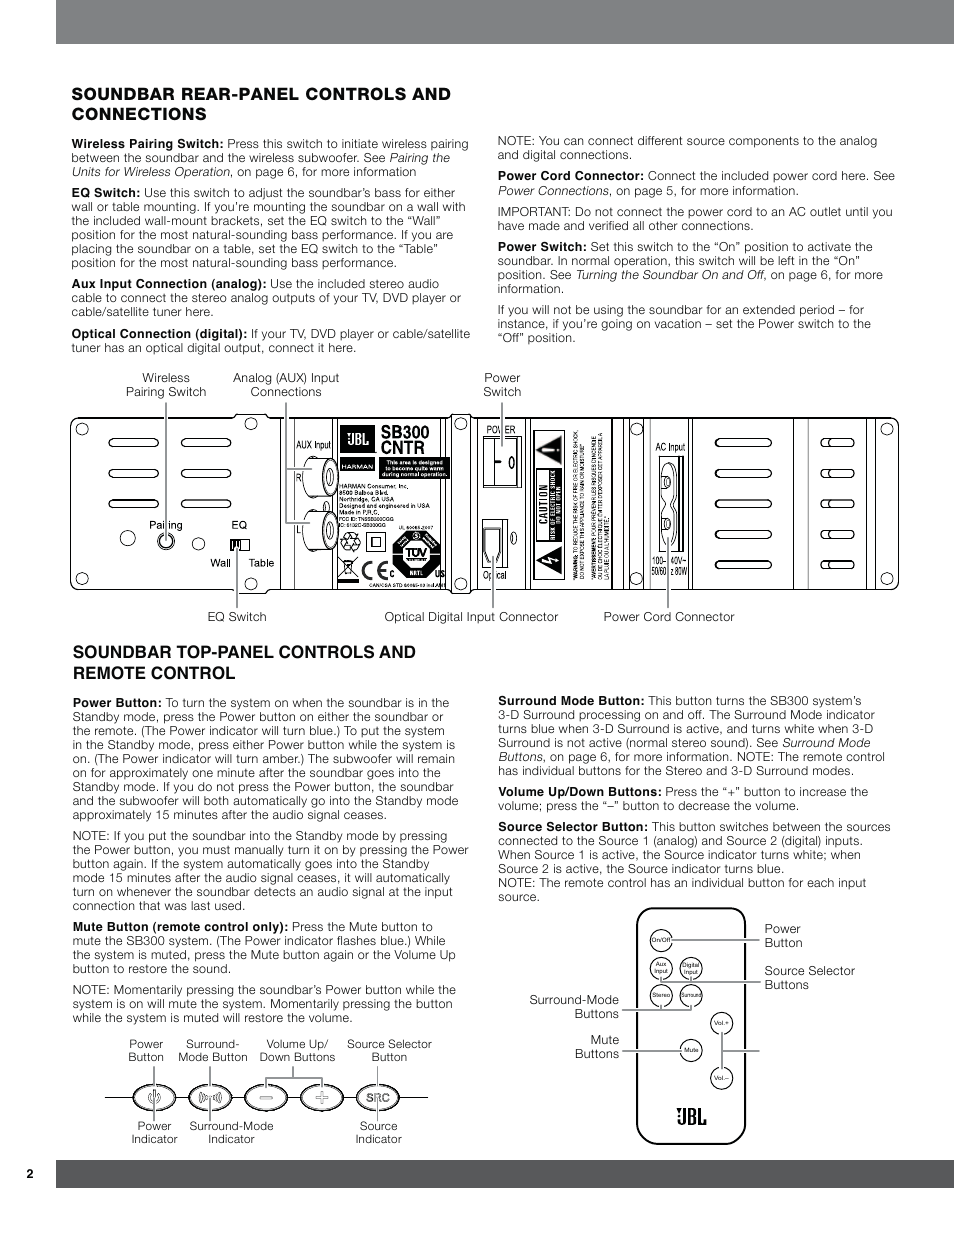 Soundbar rear-panel controls and connections | JBL SB300 User Manual | Page  2 / 8 | Original mode